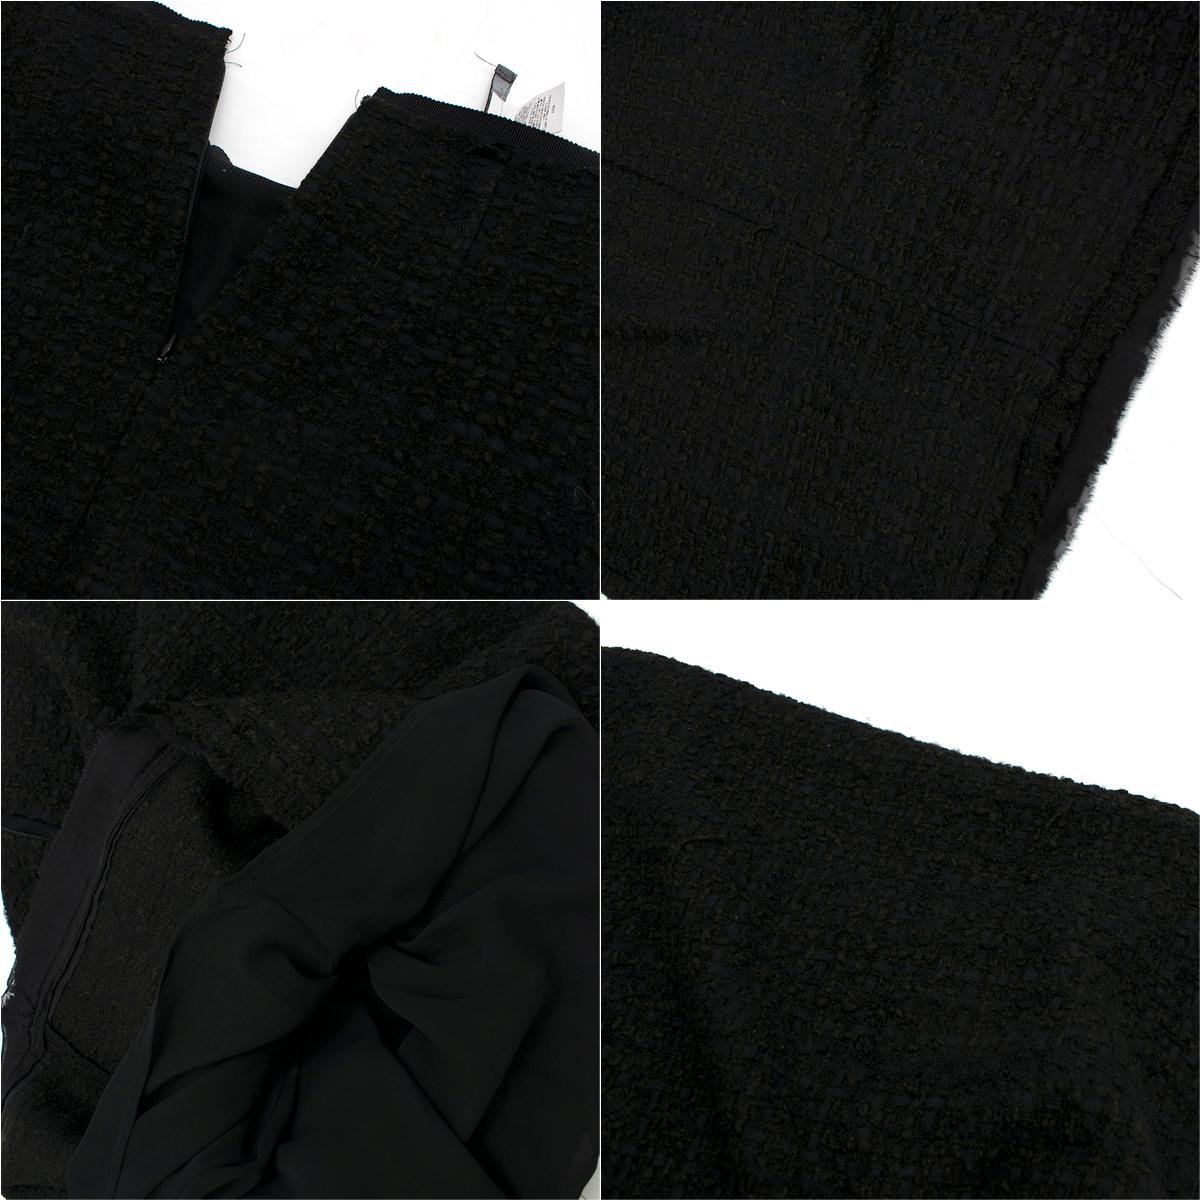 Alberta Ferretti Black Tweed Jacket & Skirt	- Size US 8 6